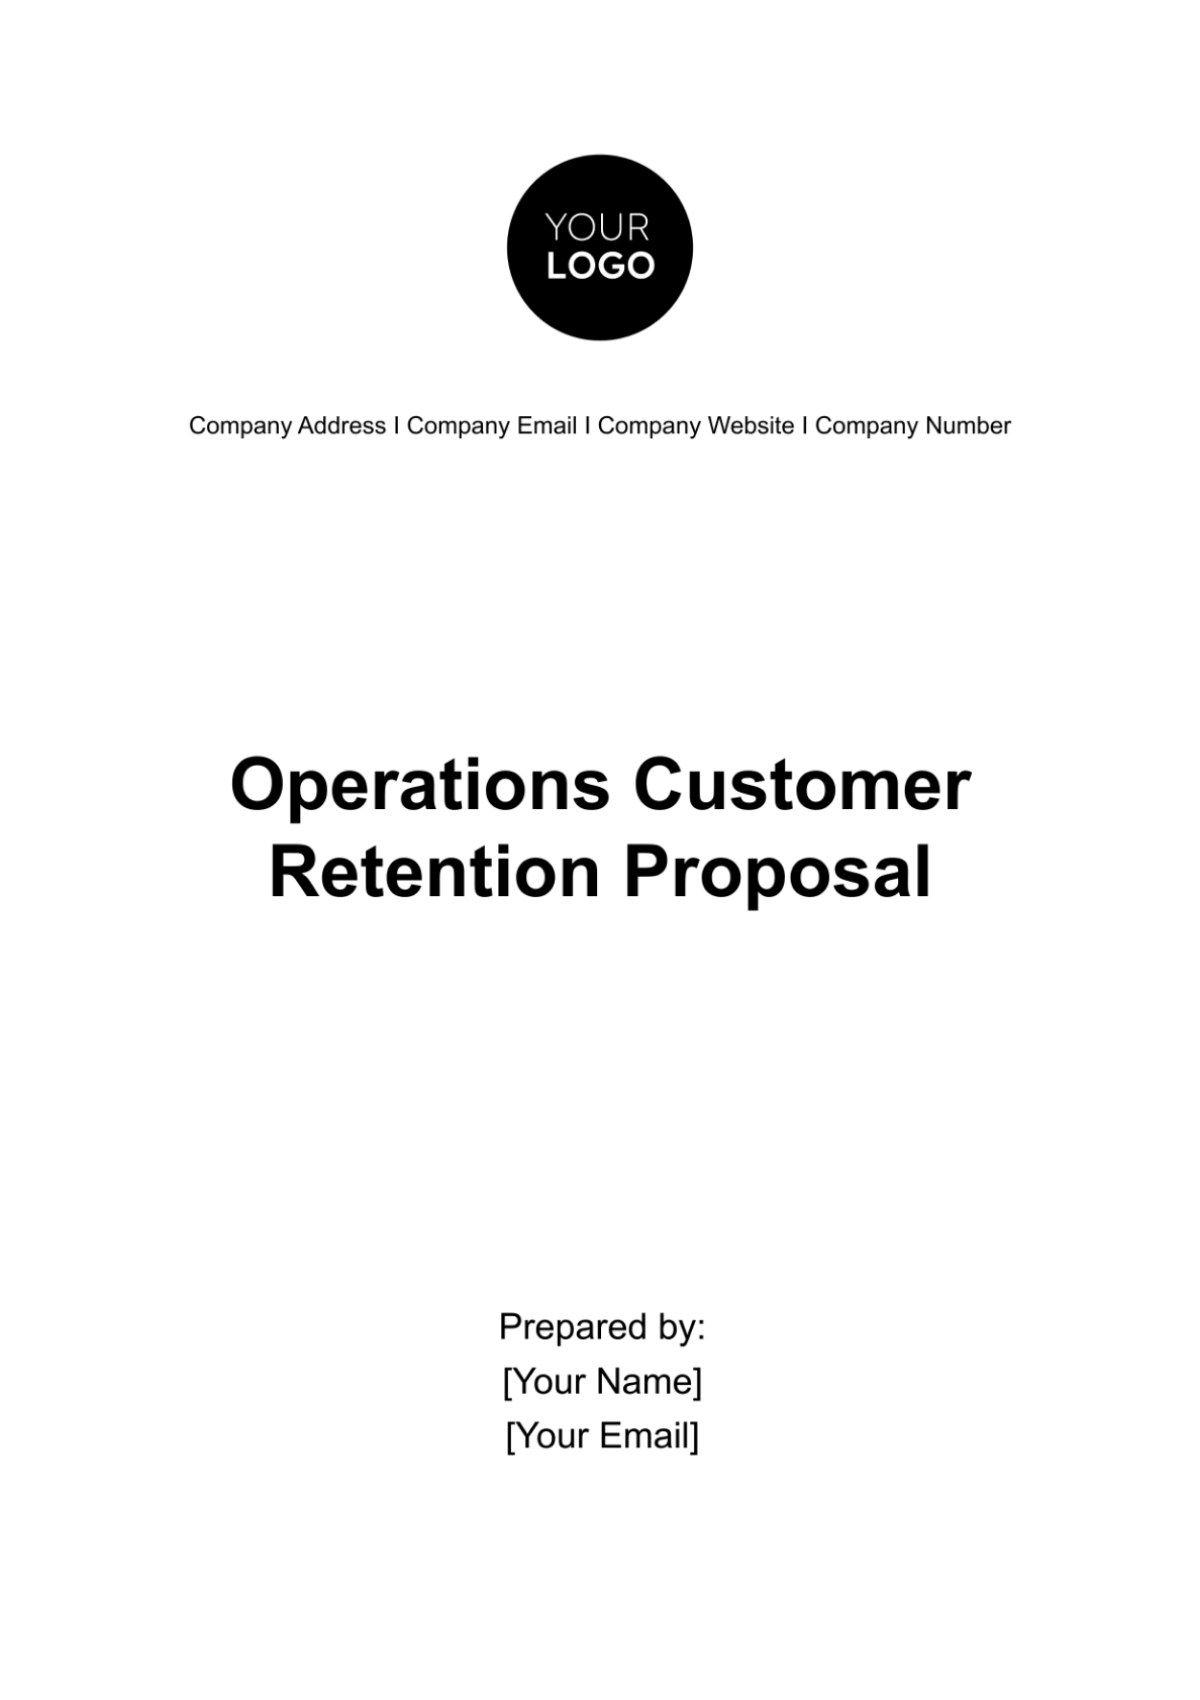 Operations Customer Retention Proposal Template